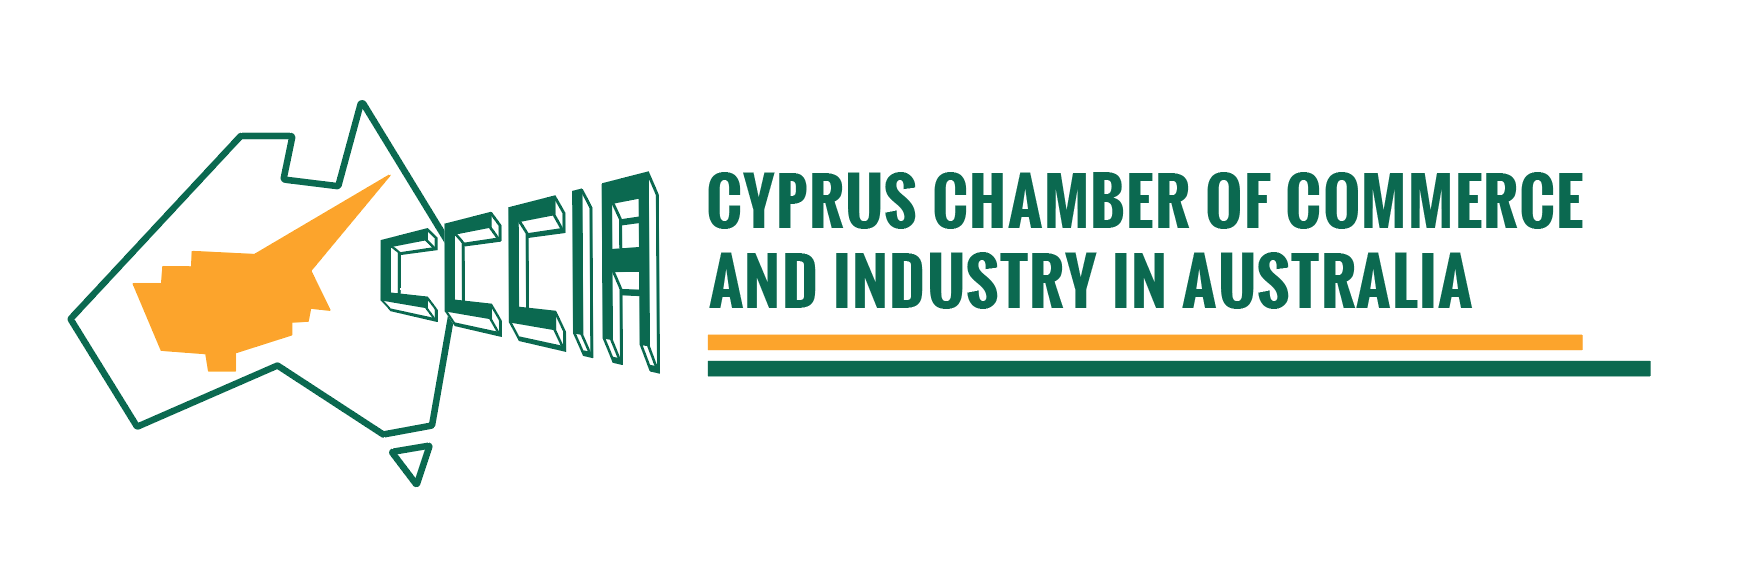 Cyprus Chamber of Commerce in Australia headshot